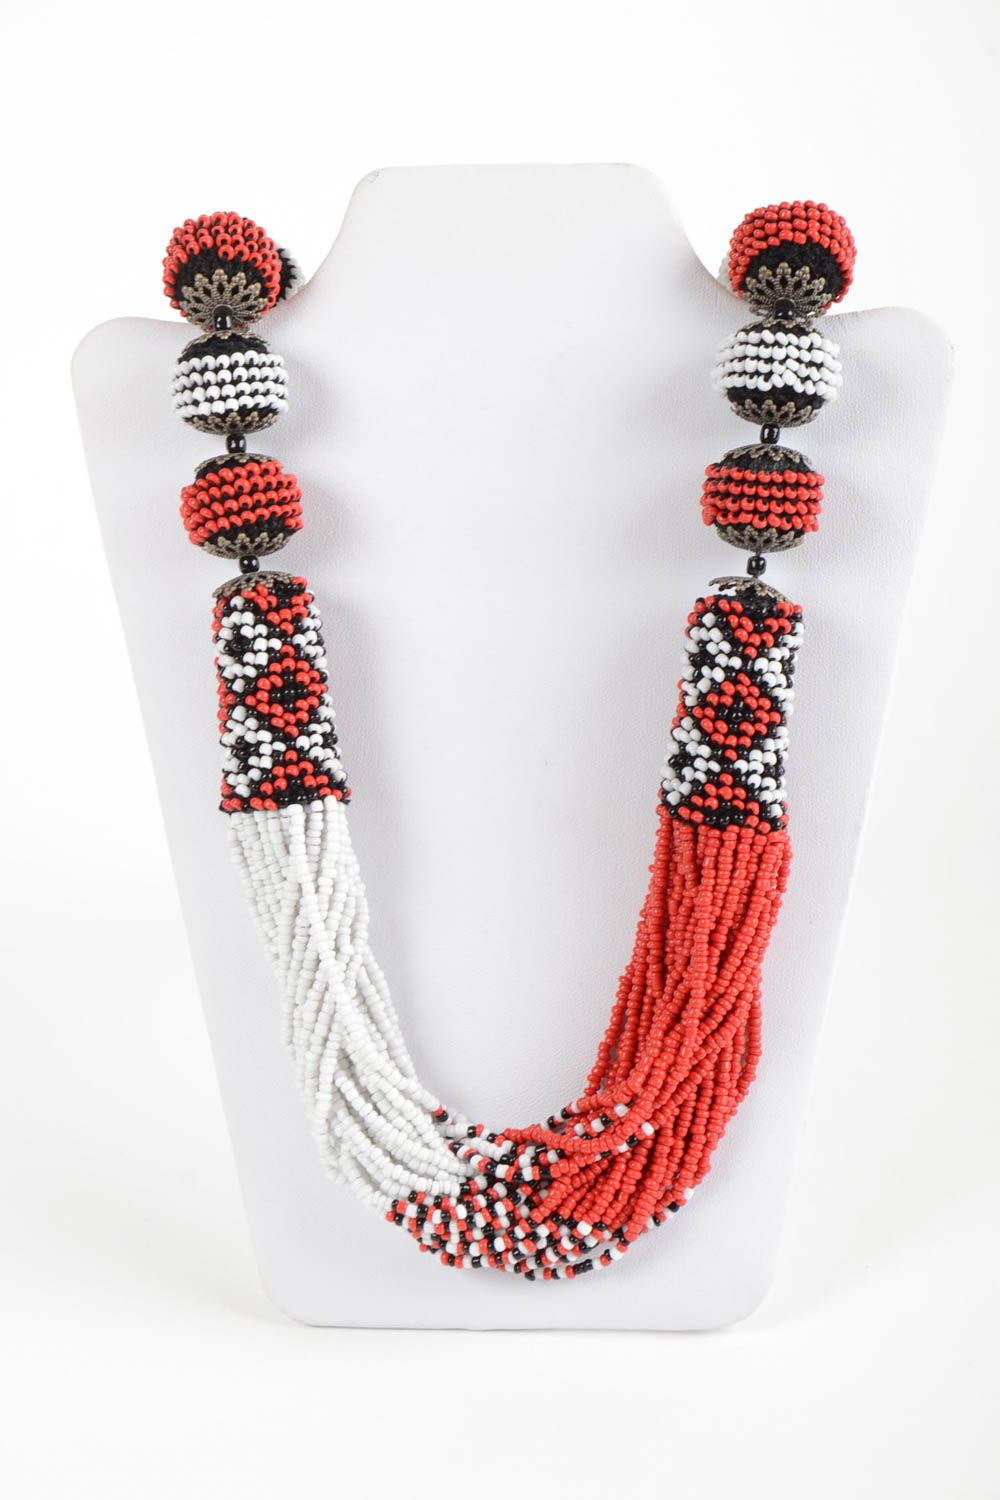 Beaded necklace in ethnic style handmade massive necklace stylish accessory photo 2